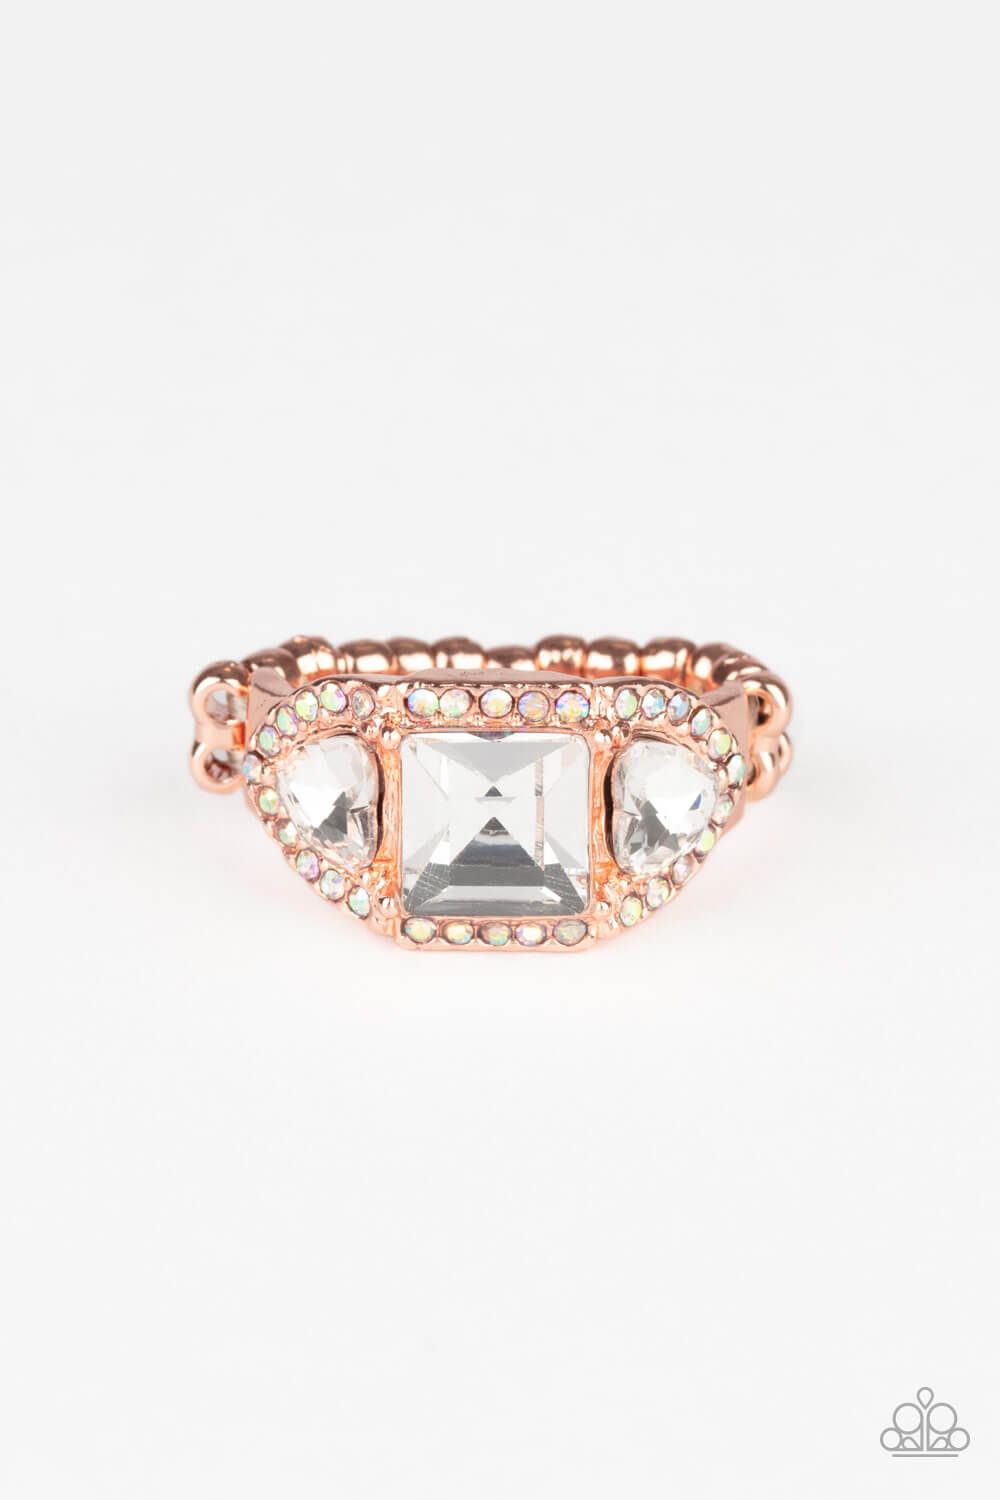 Royal Riches - Copper Ring - Princess Glam Shop